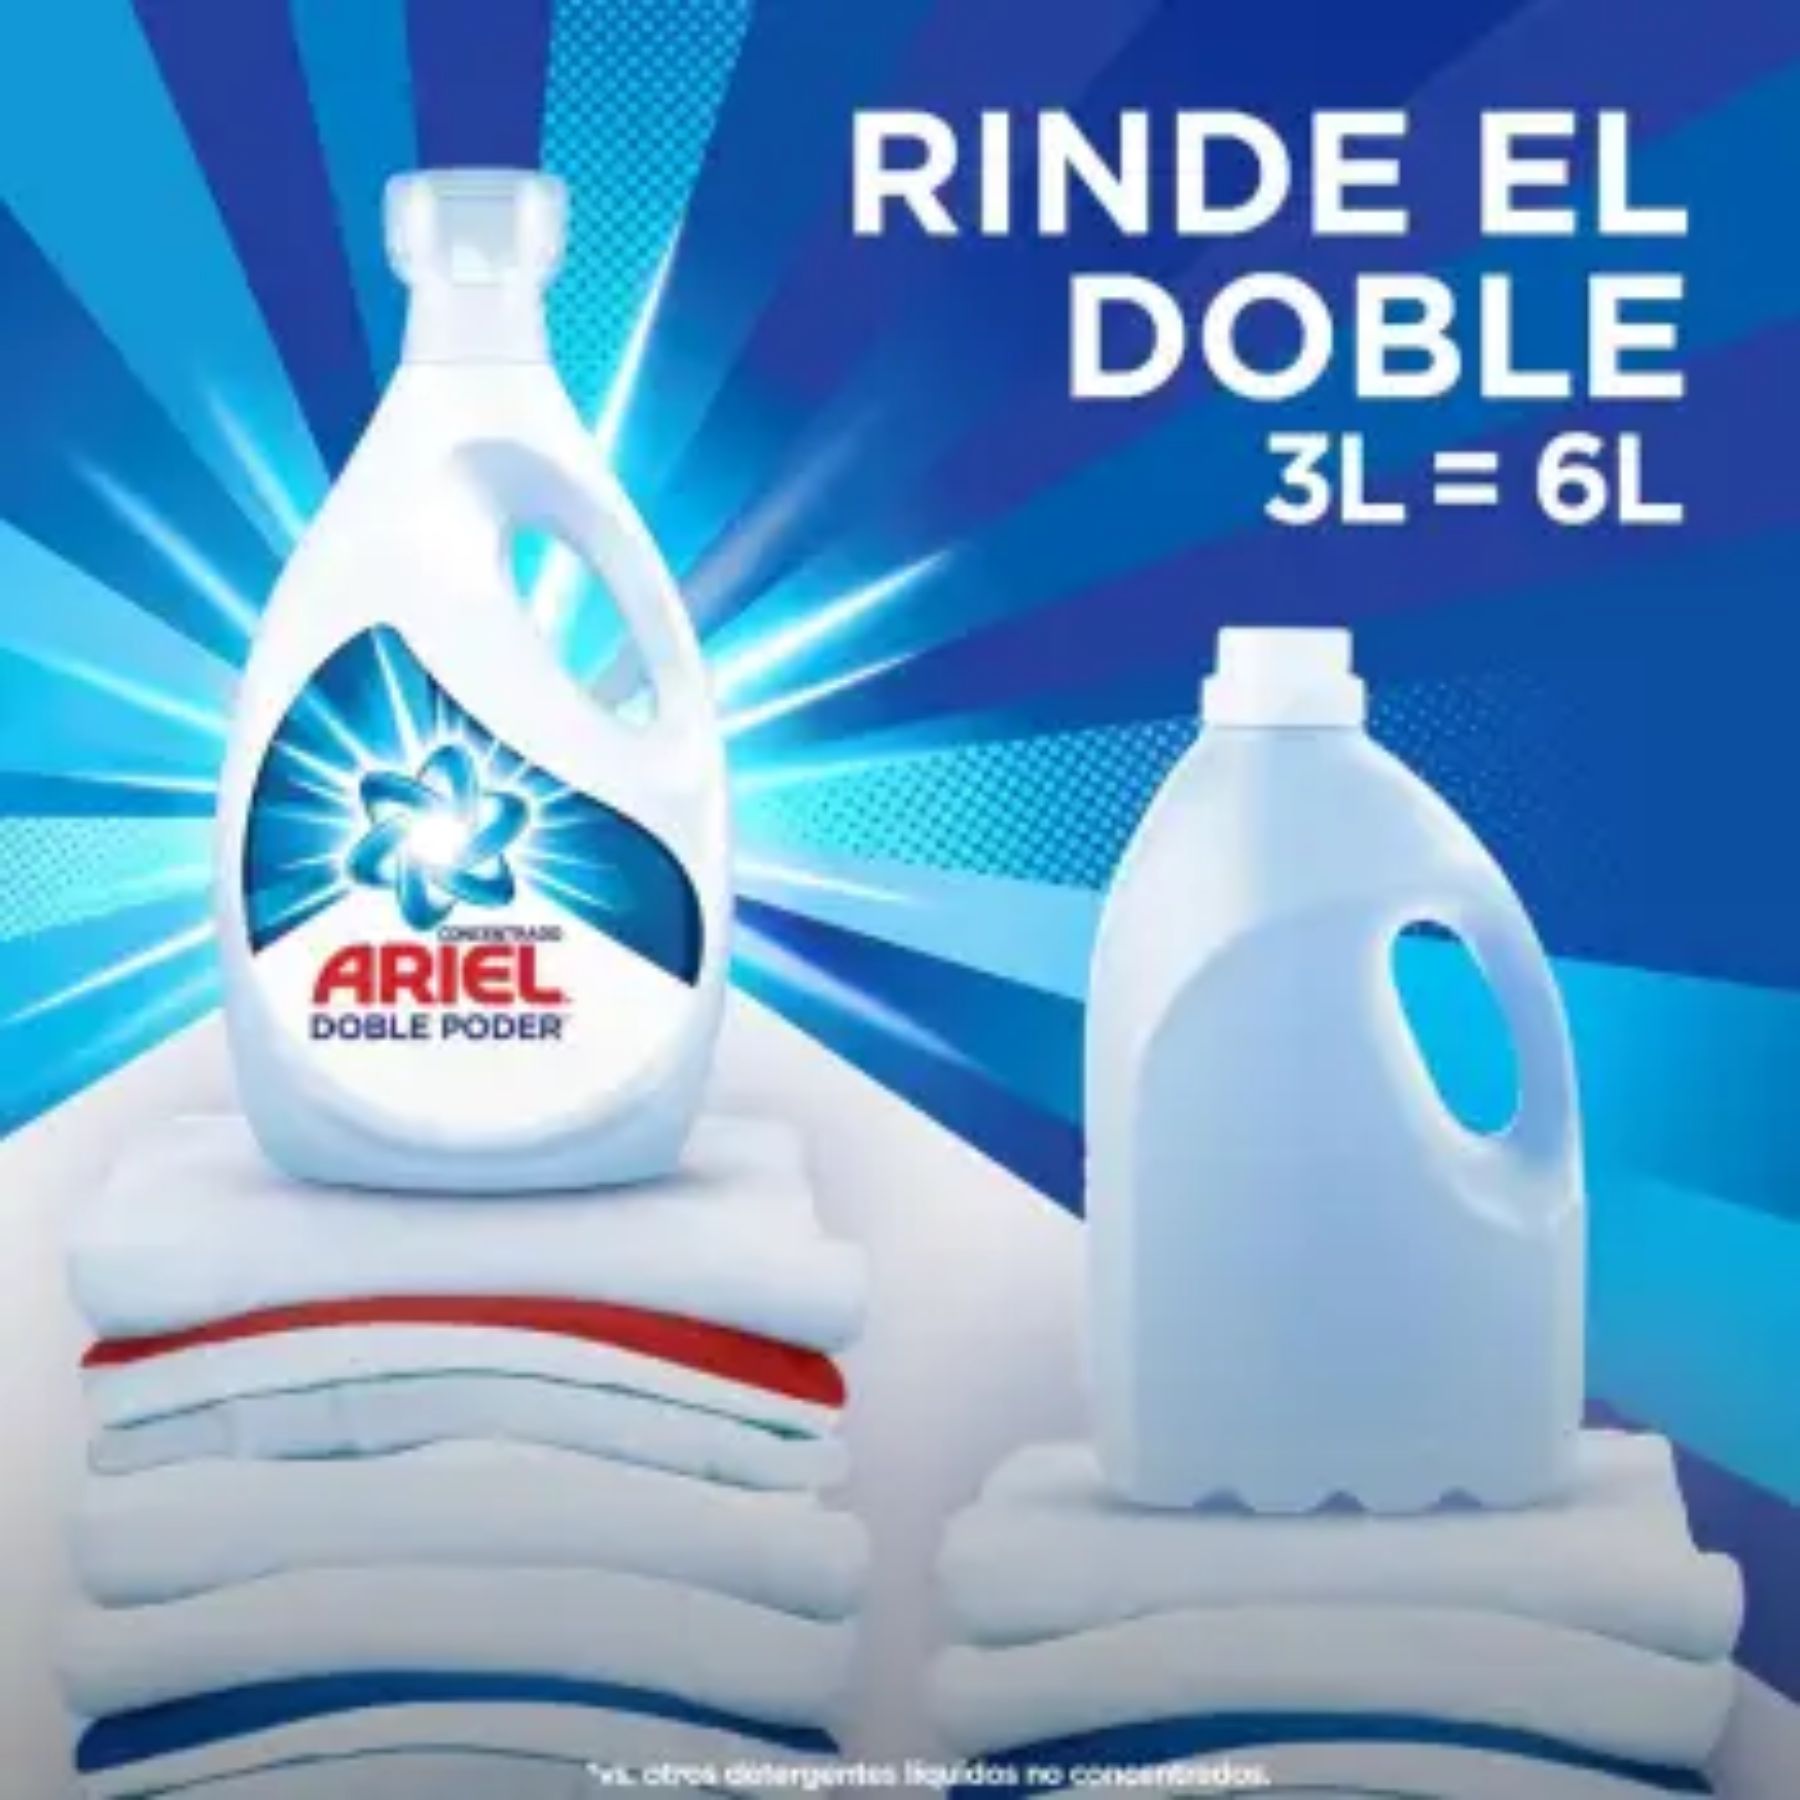 Detergente líquido Ariel Doble Poder 1,8 lts